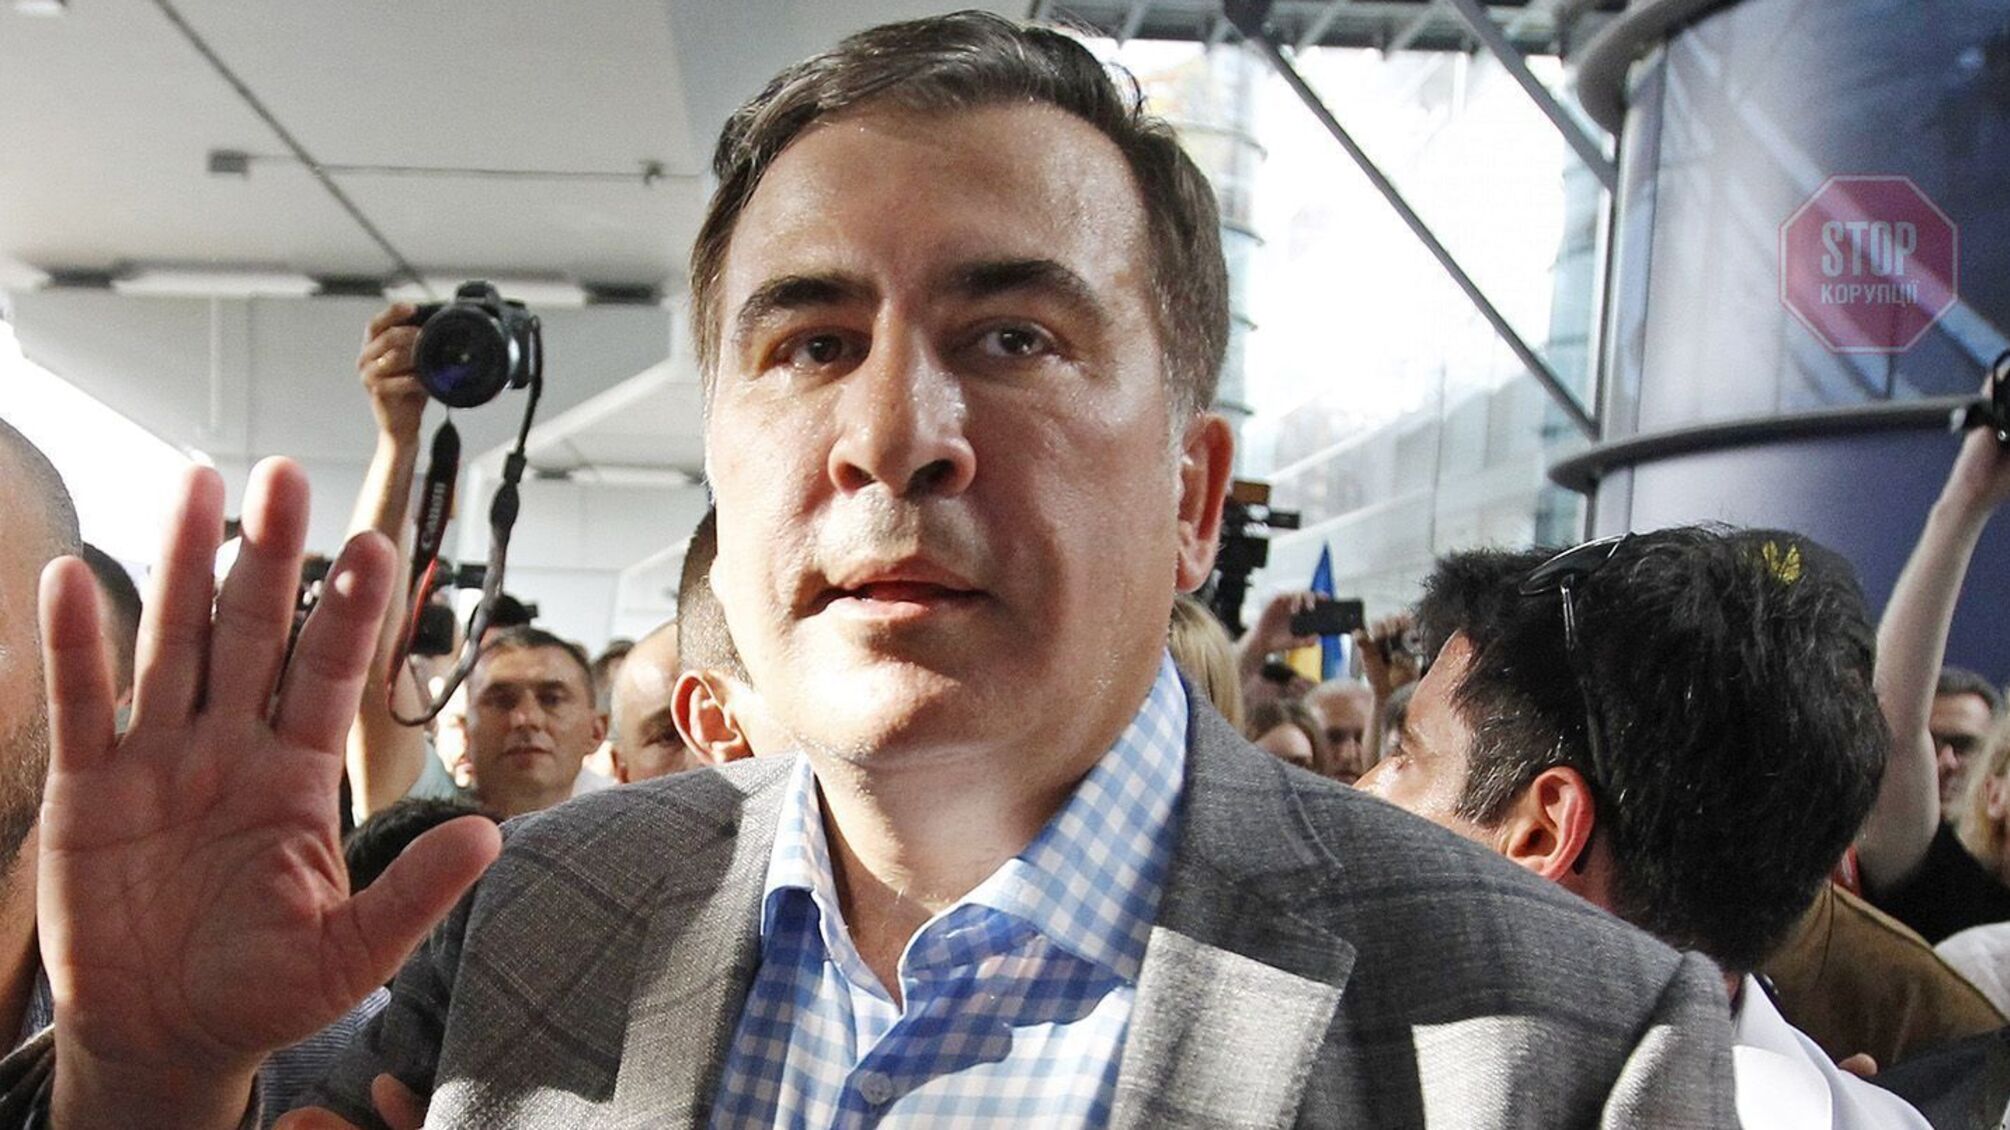 Президент Грузии: Саакашвили не будет помилован